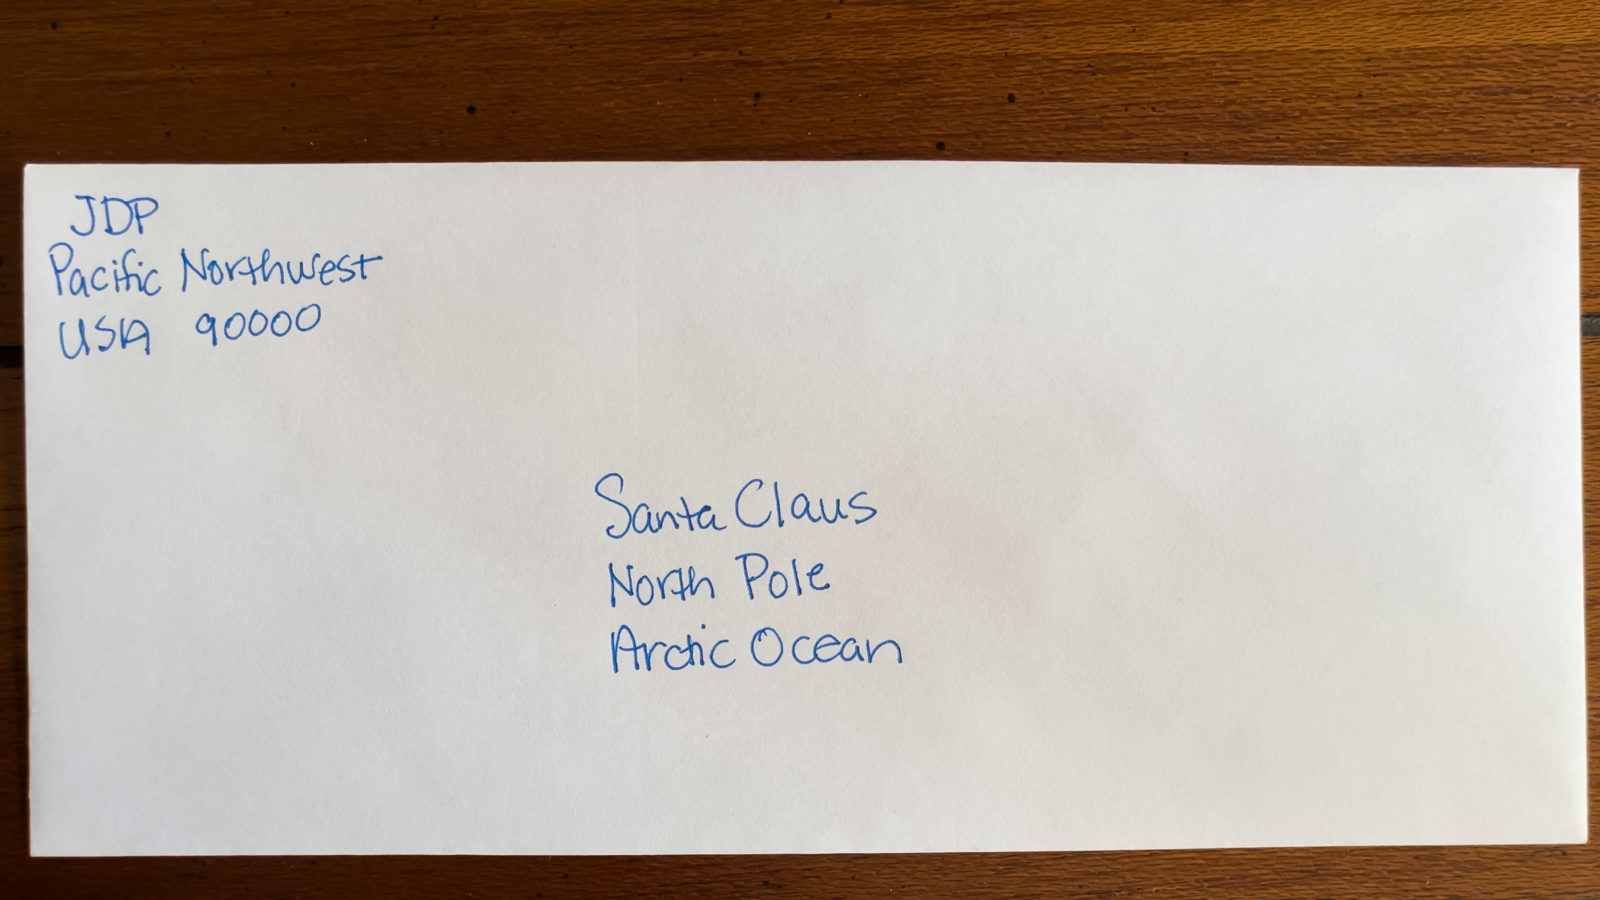 Old-fashioned letter - an envelope addressed to Santa